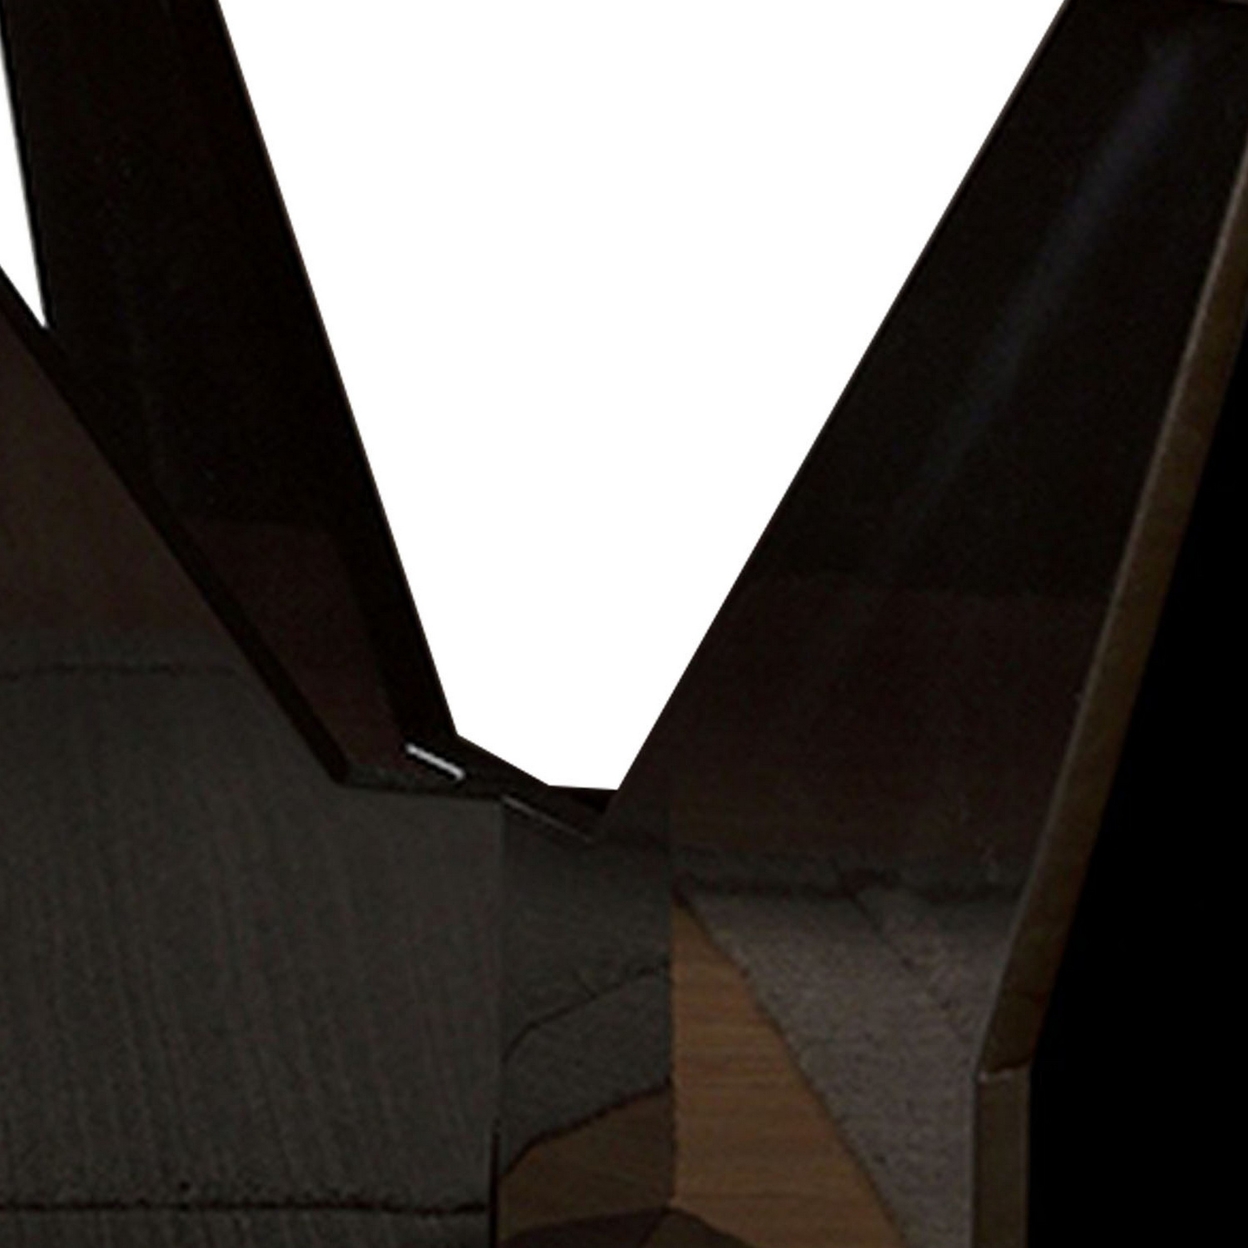 Pera 47 Inch Sofa Console Table, Glass Insert Surface, Geometric, Black- Saltoro Sherpi